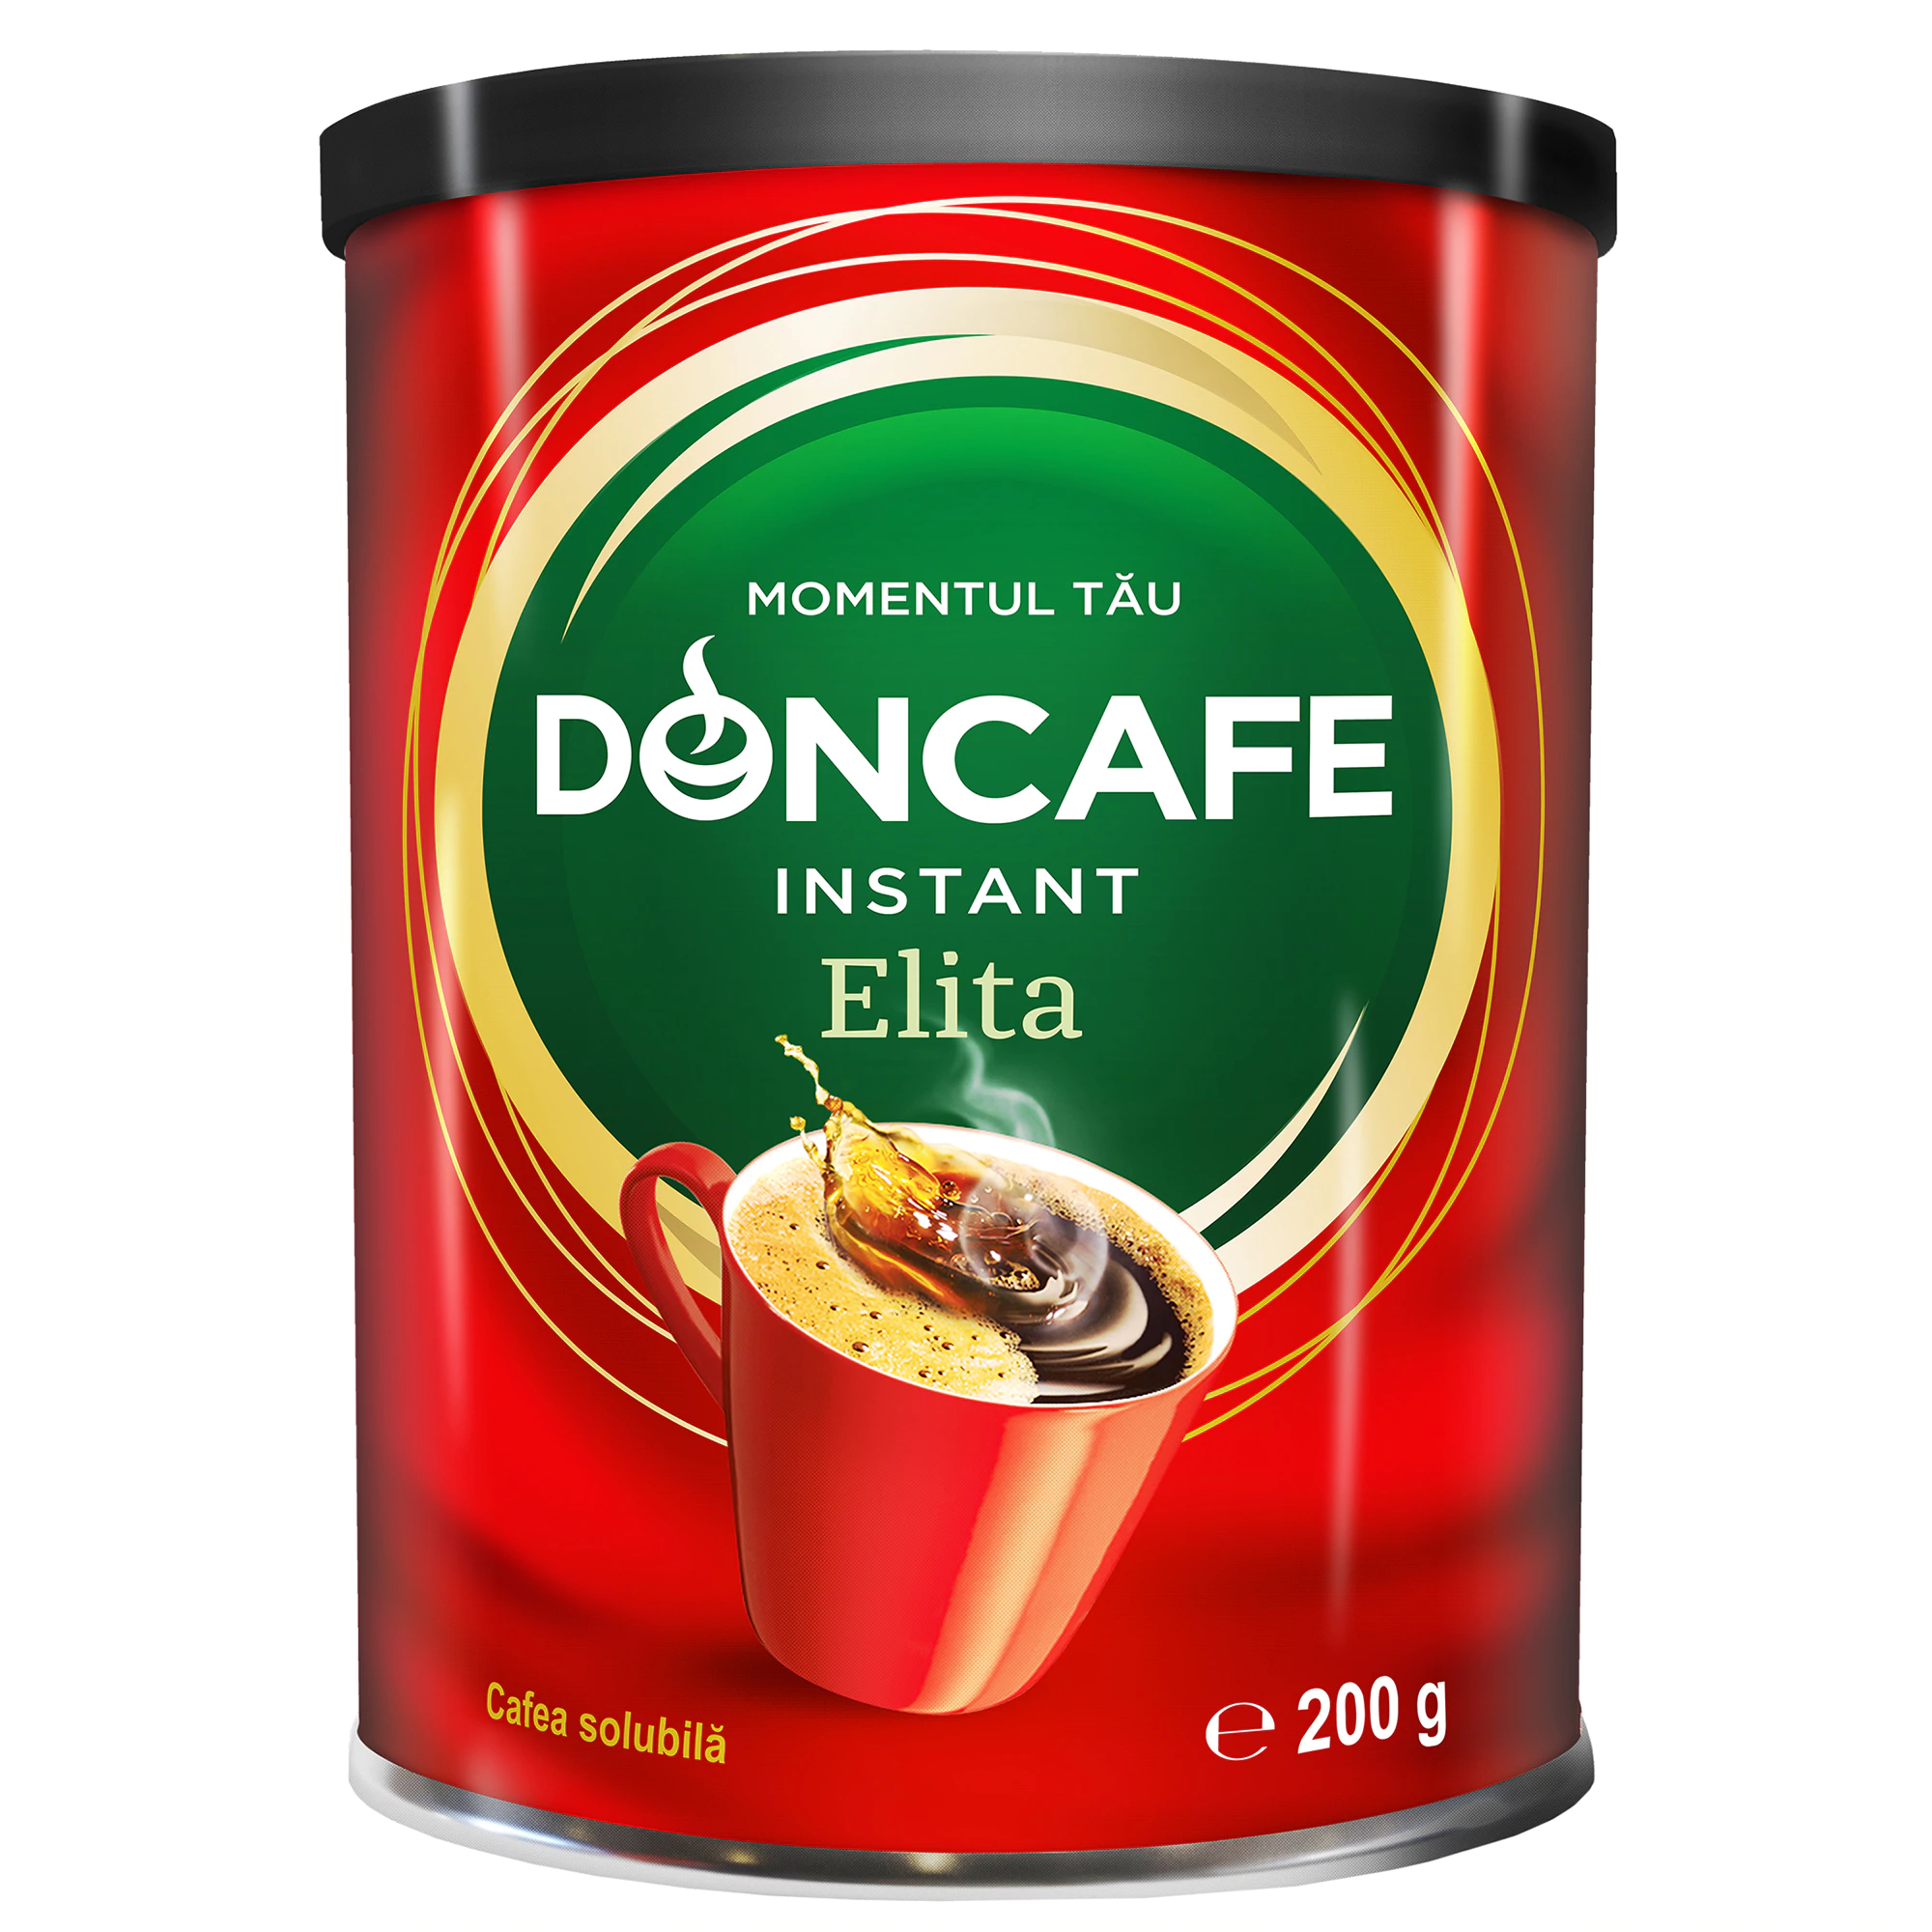 DONCAFE Elita Cafea Instant 200g [1]